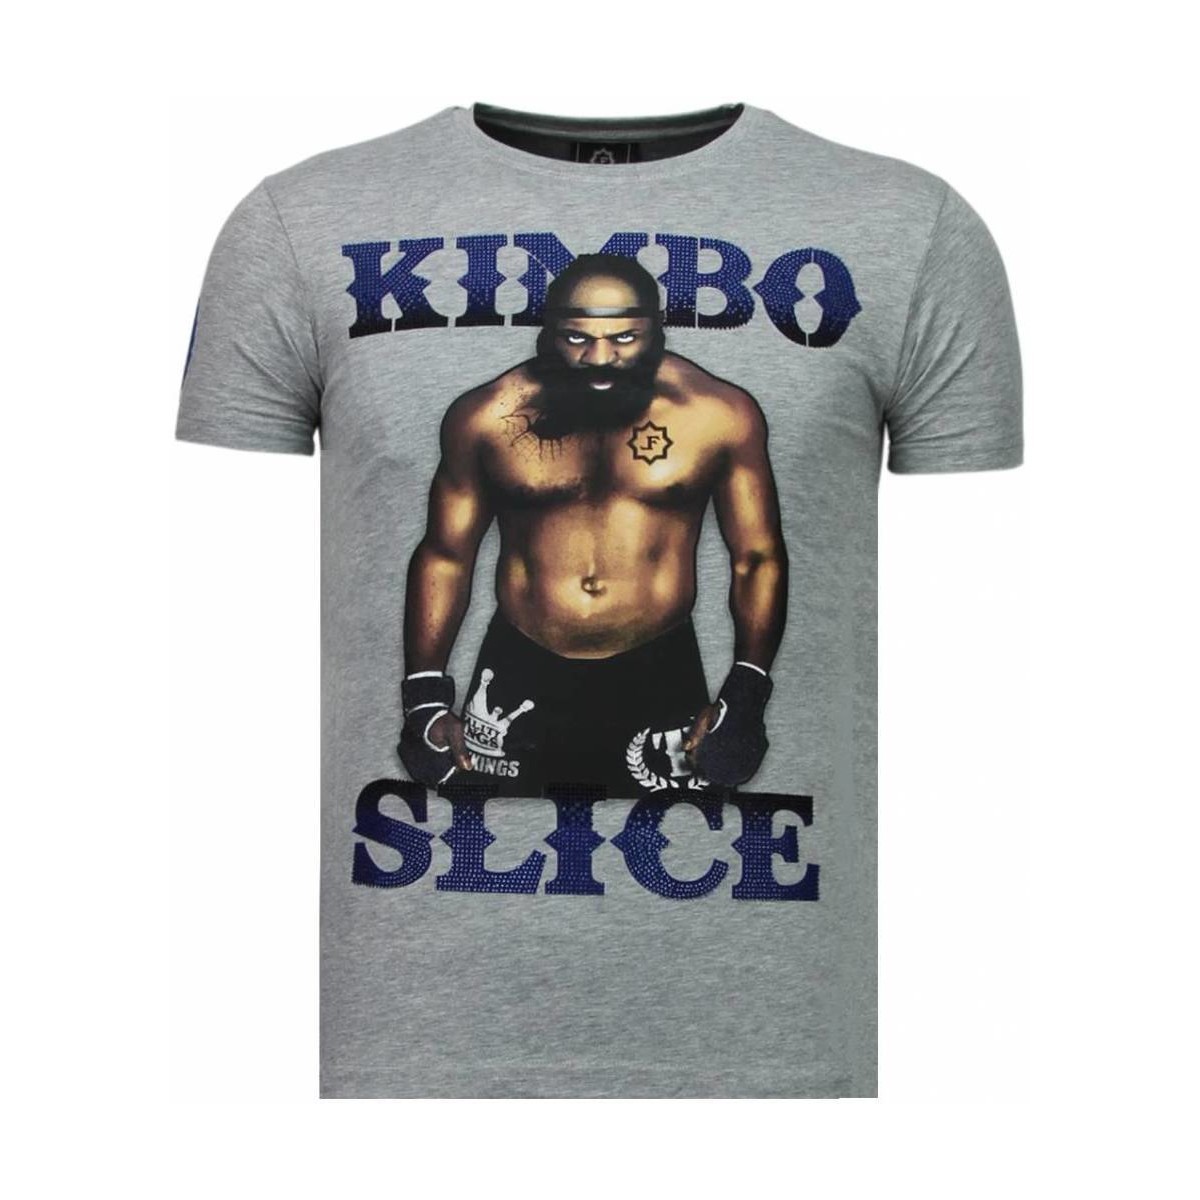 textil Herr T-shirts Local Fanatic Kimbo Slice Rhinestone Grå